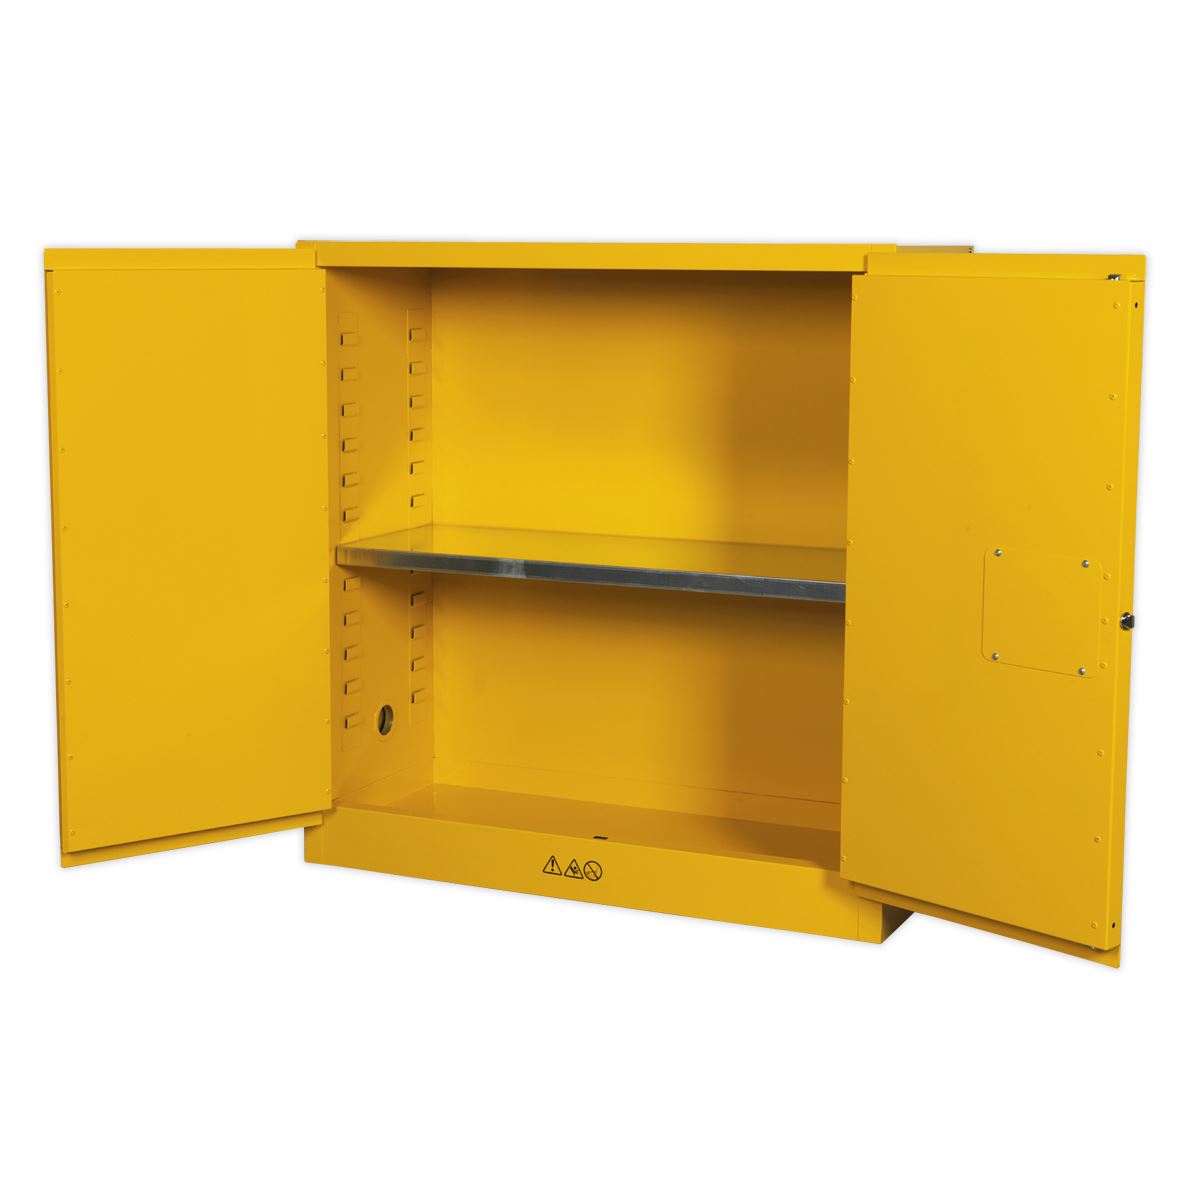 Sealey Flammables Storage Cabinet 1095 x 460 x 1120mm FSC09